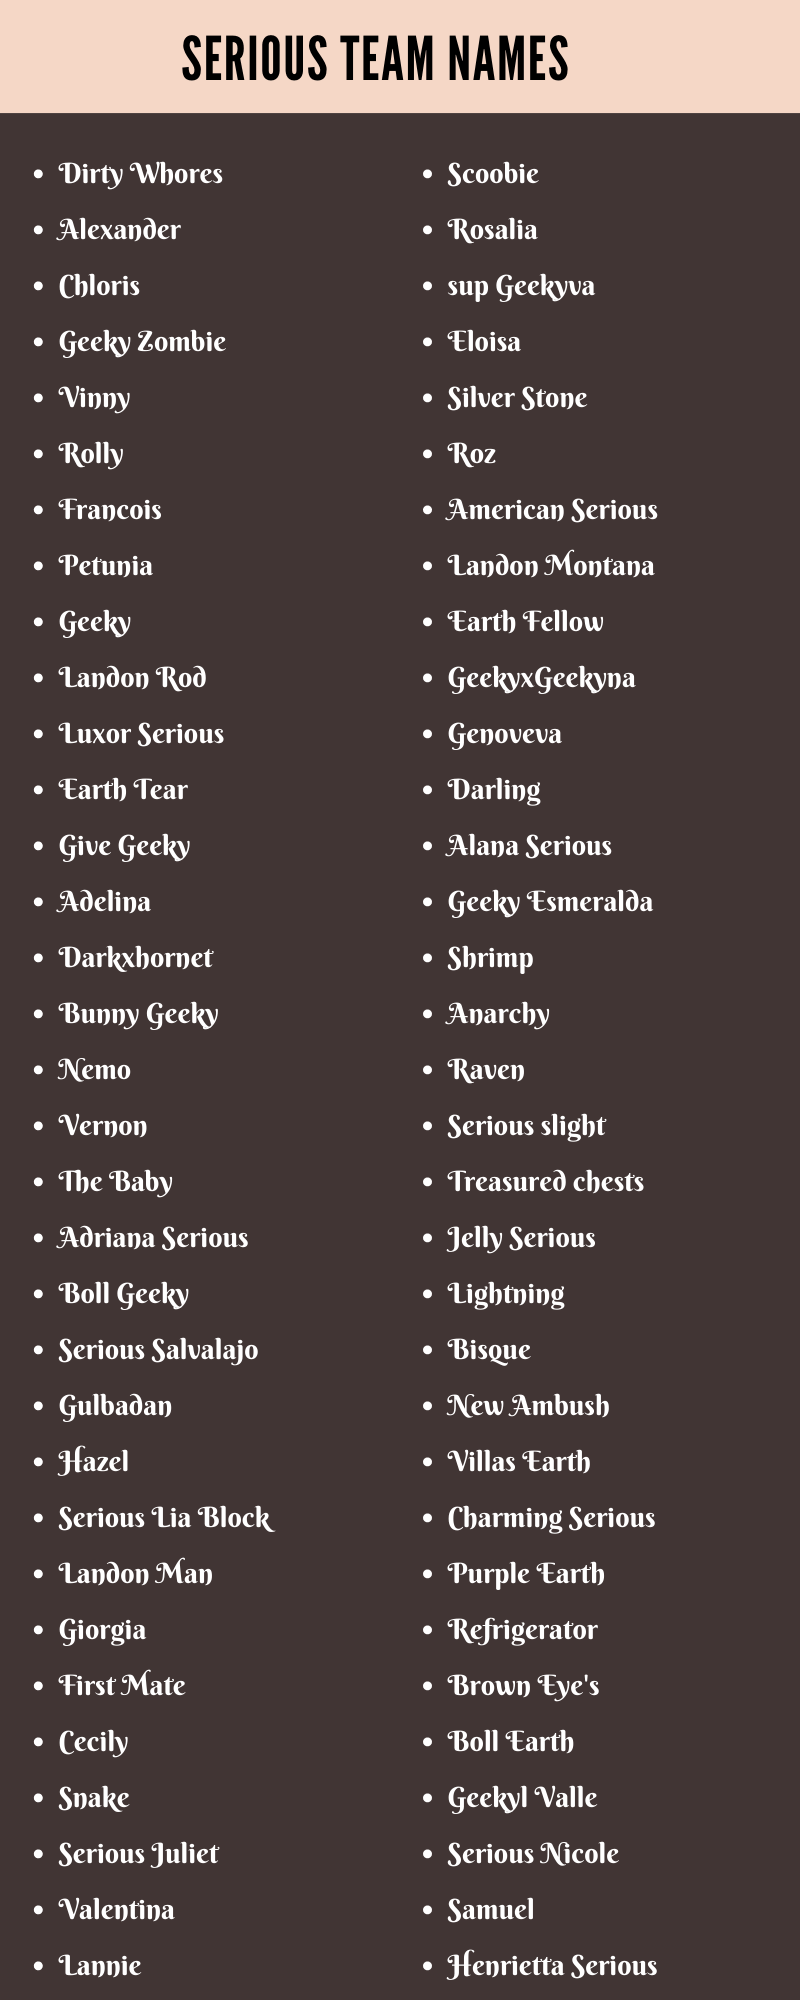 Serious Team Names